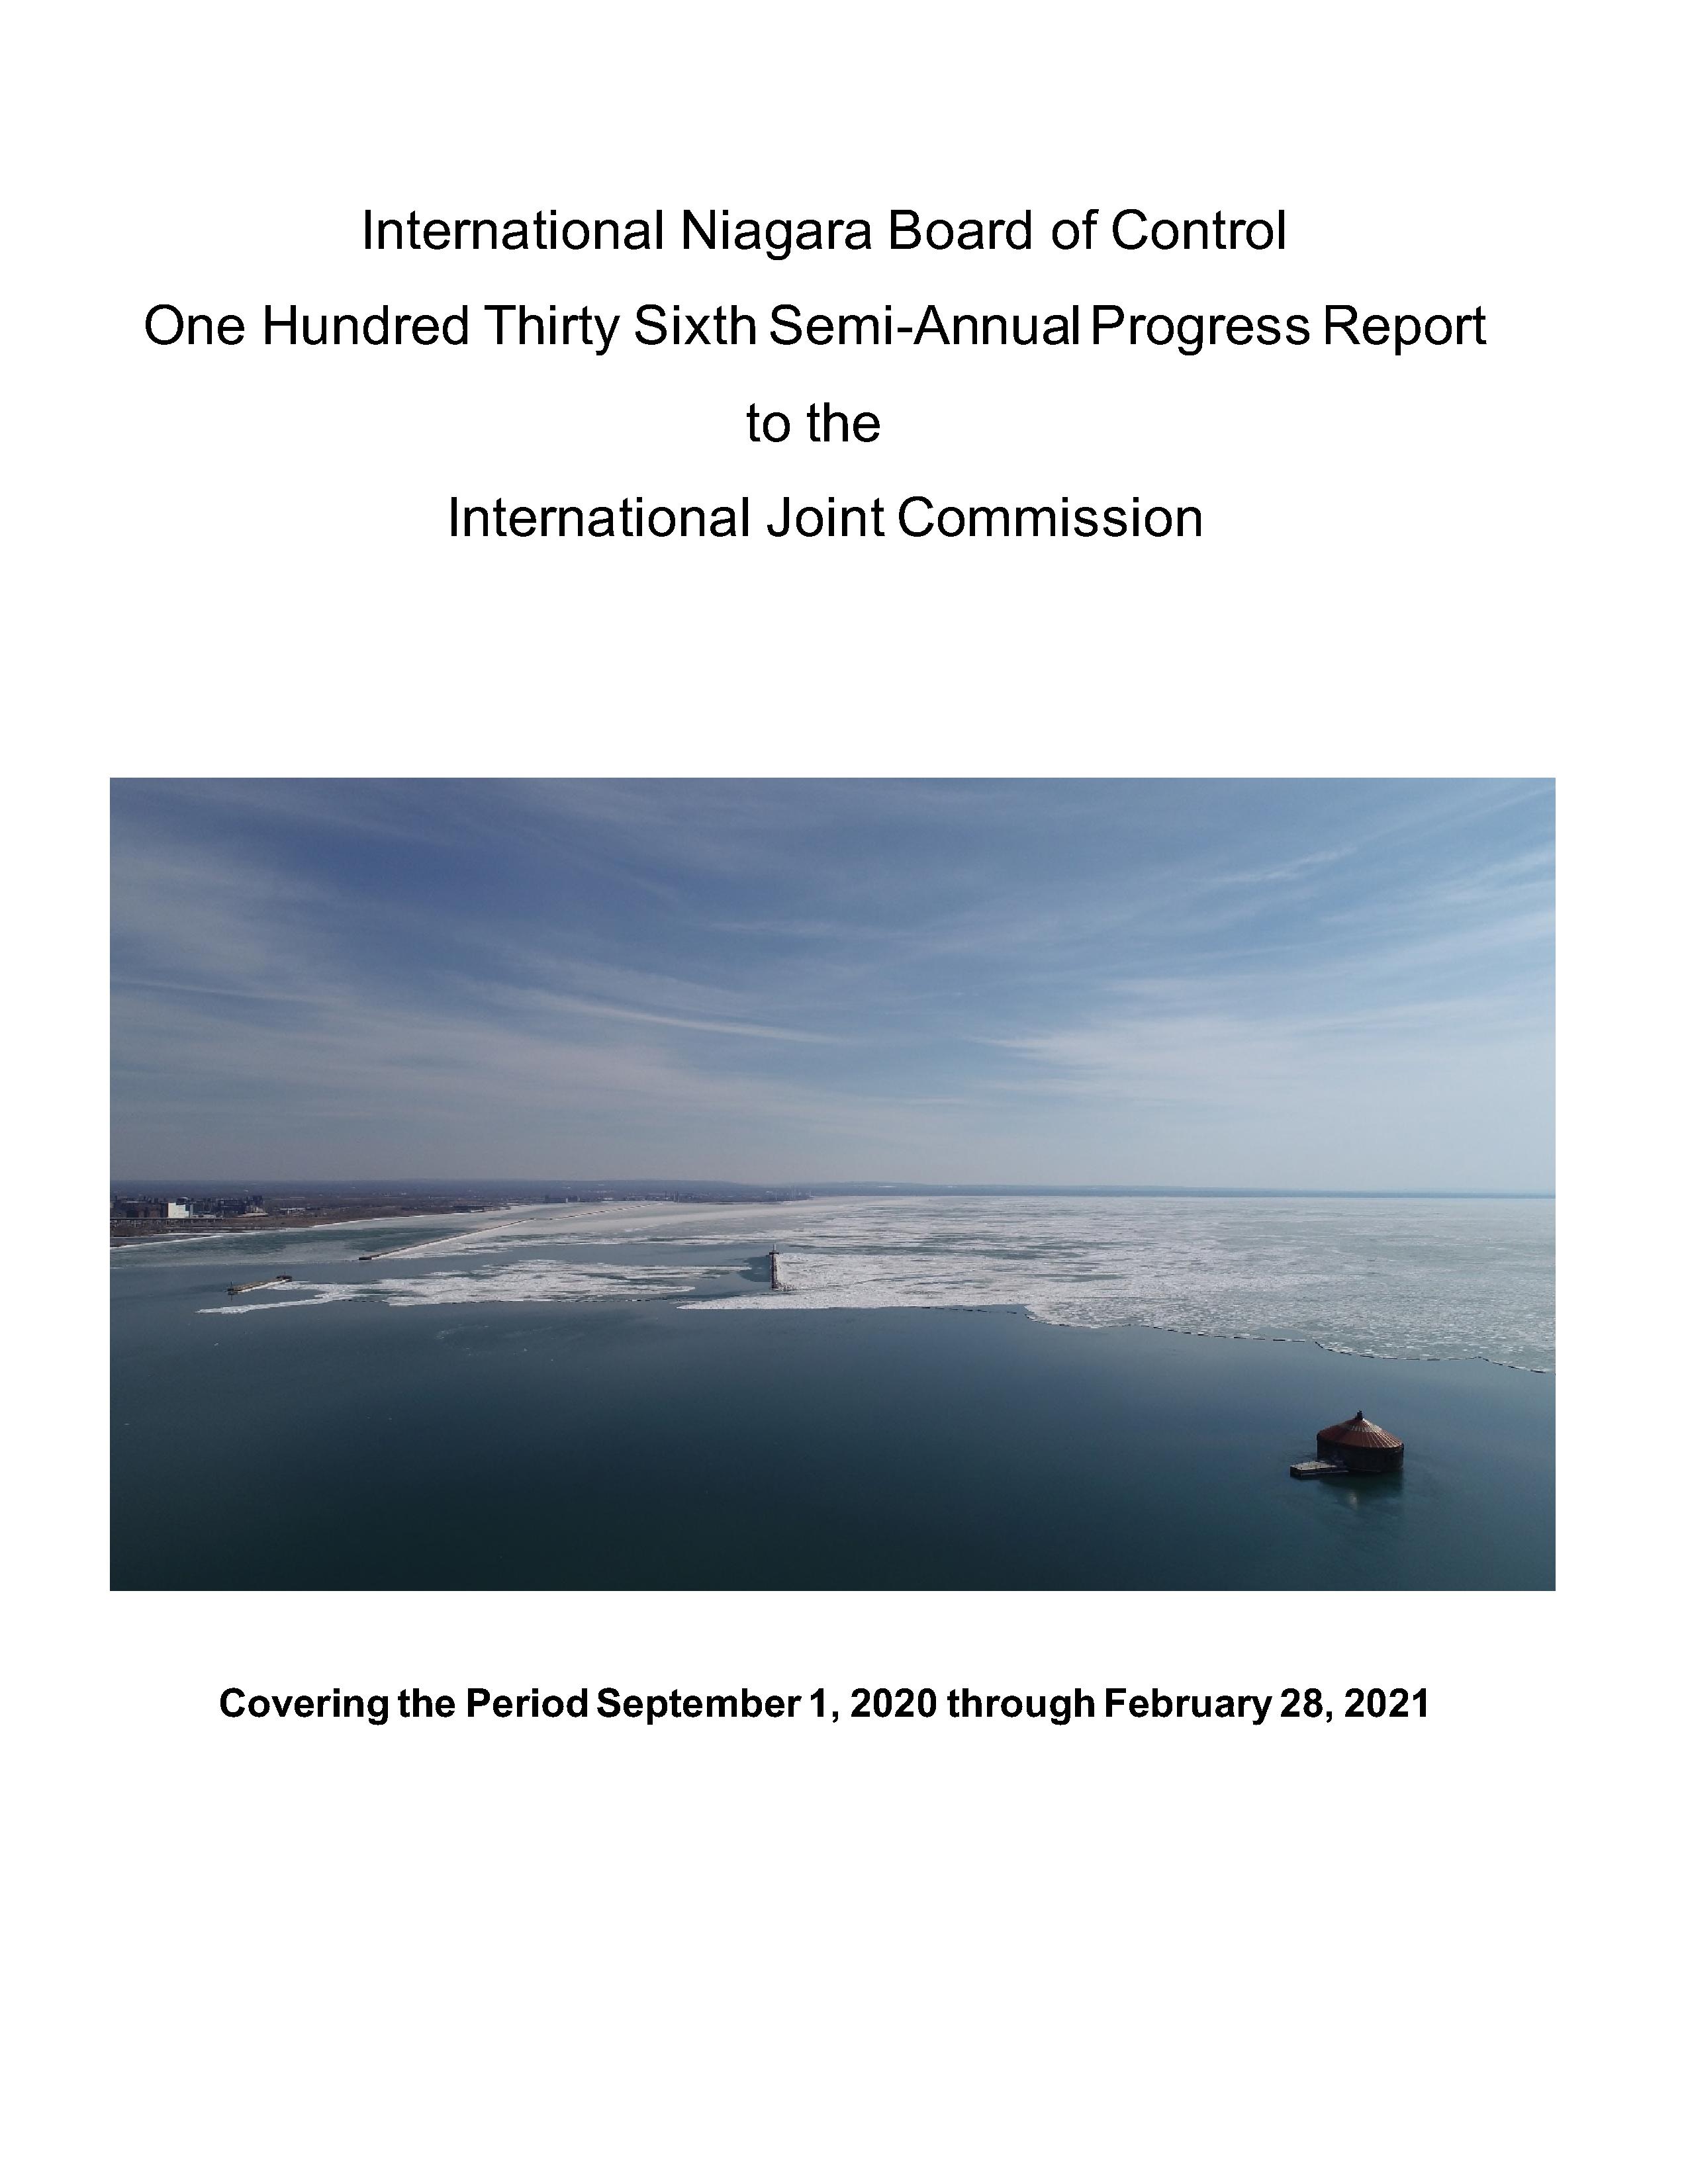 International Niagara Board of Control 136th Semi-Annual Progress Report